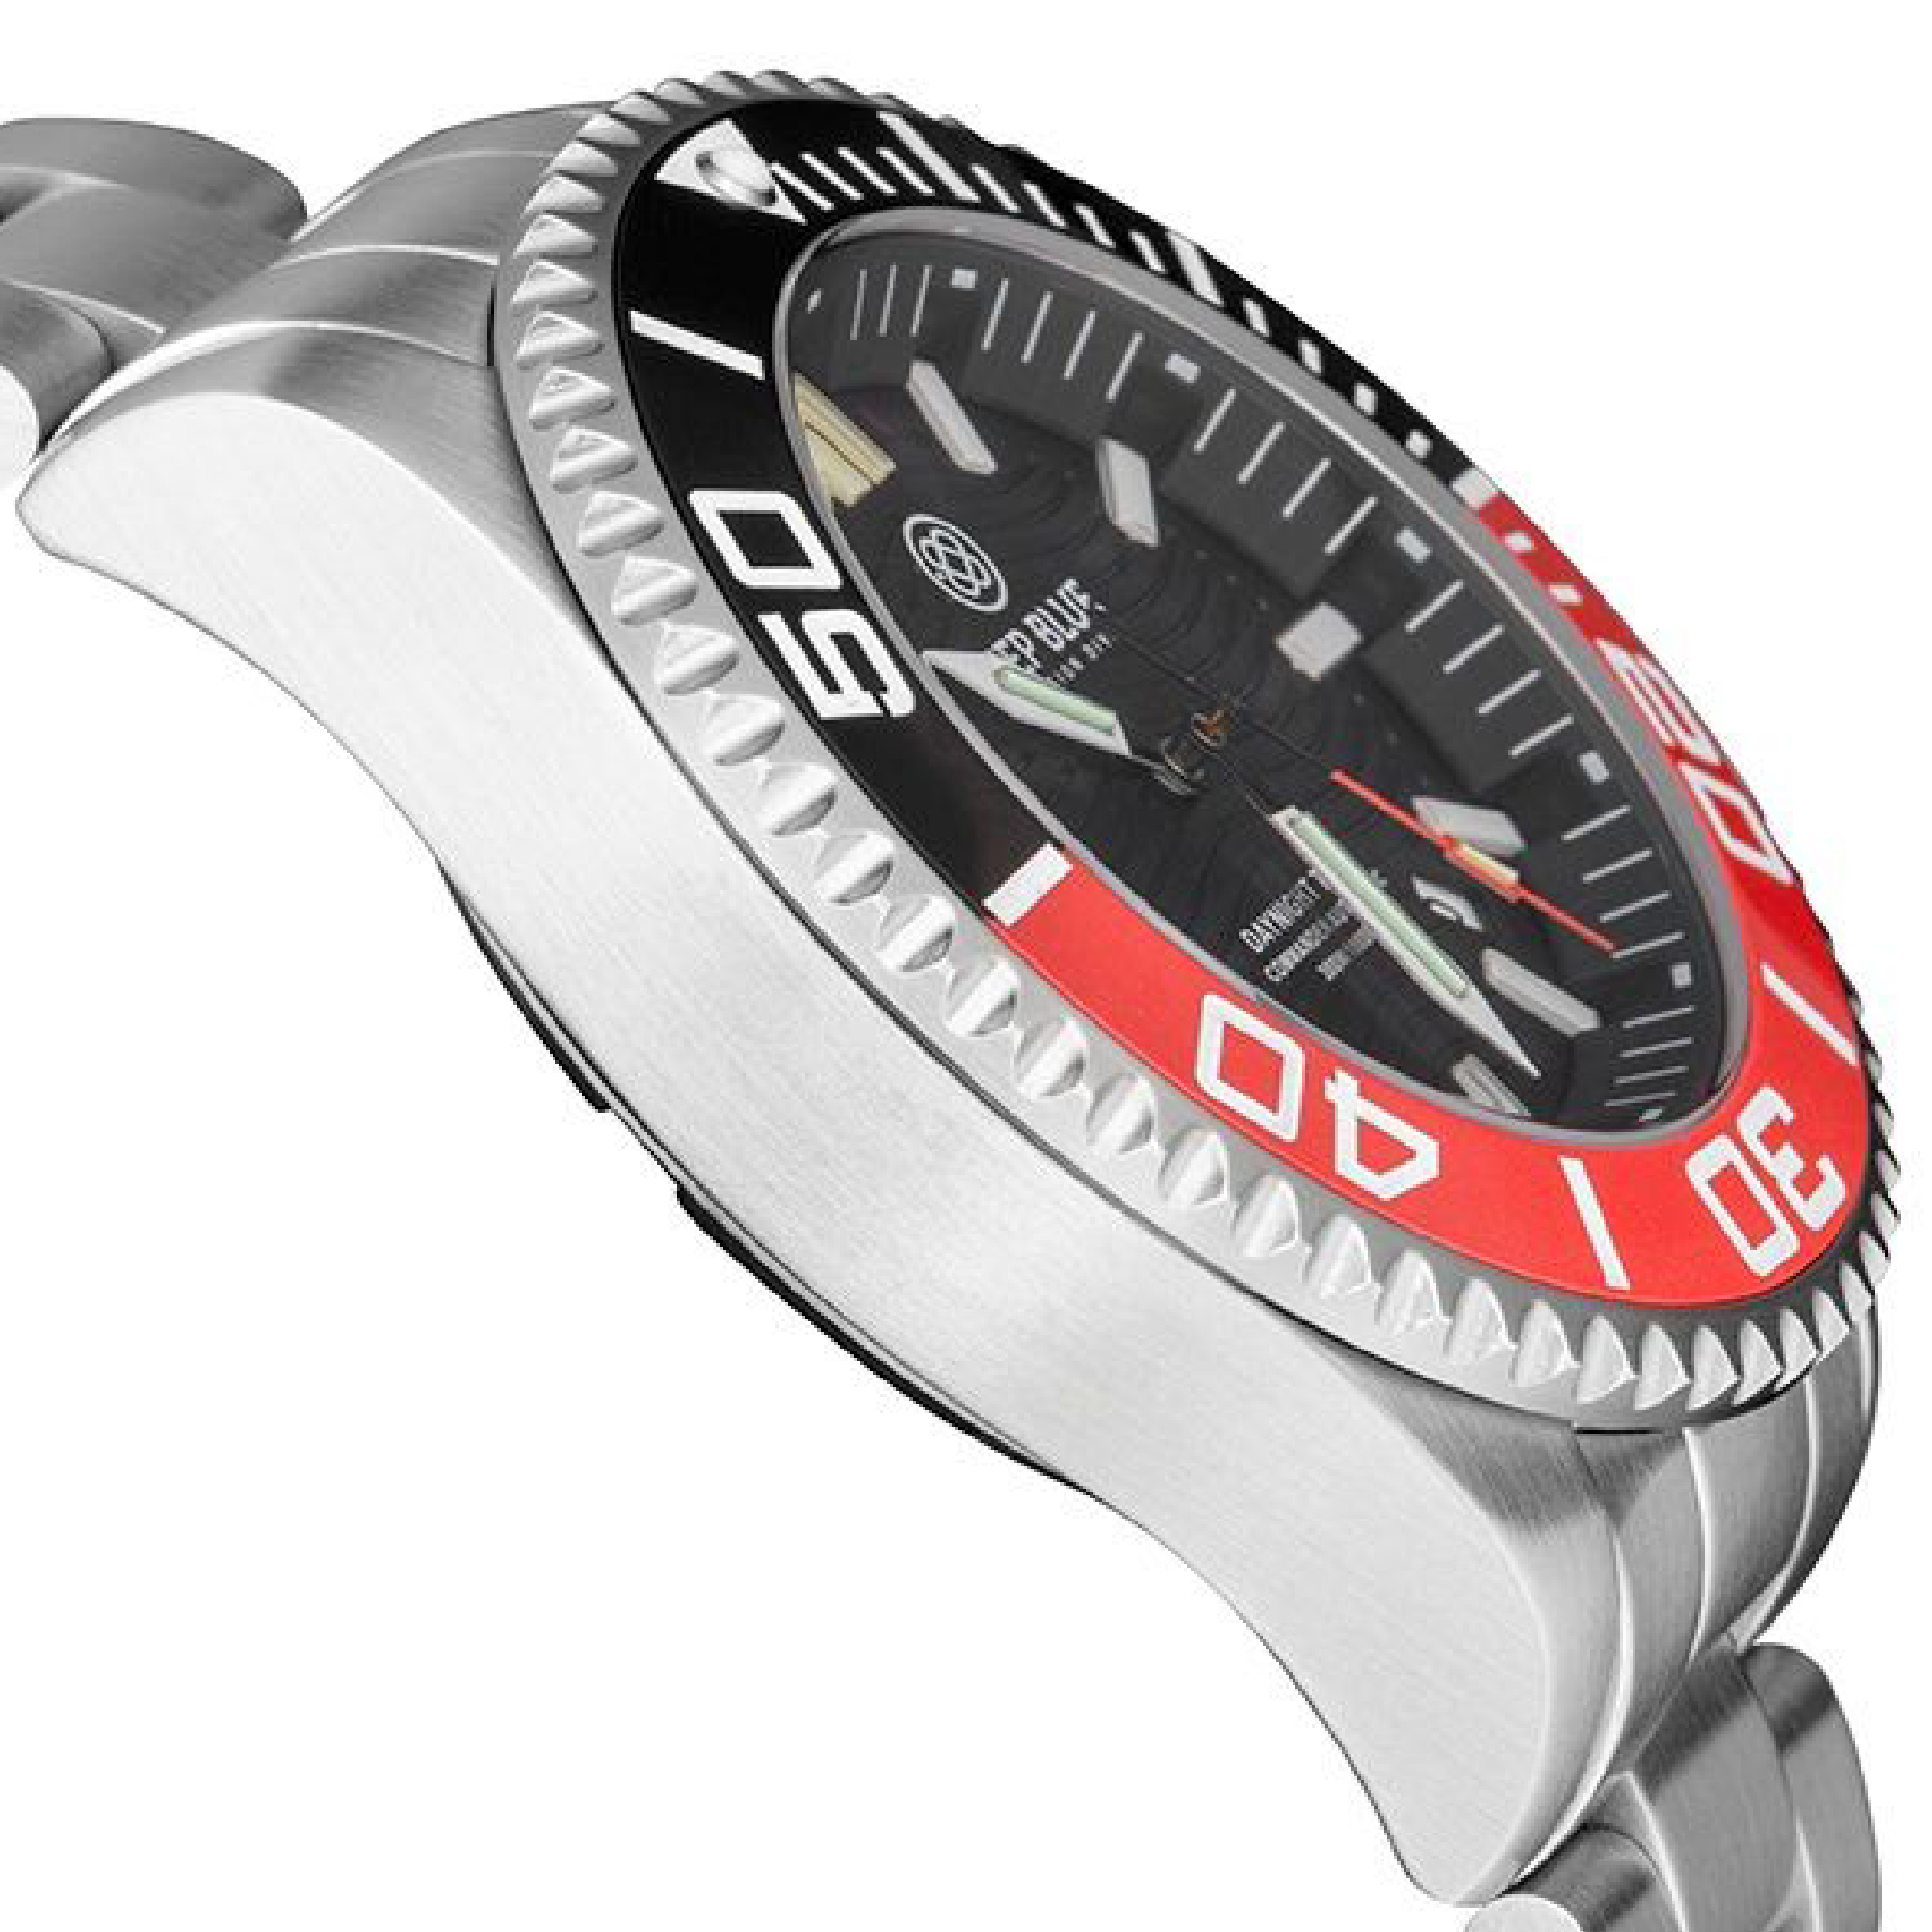 Deep Blue DayNight Commander T-100 Automatic Men's Diver Watch Black-Red Bezel/Black Dial